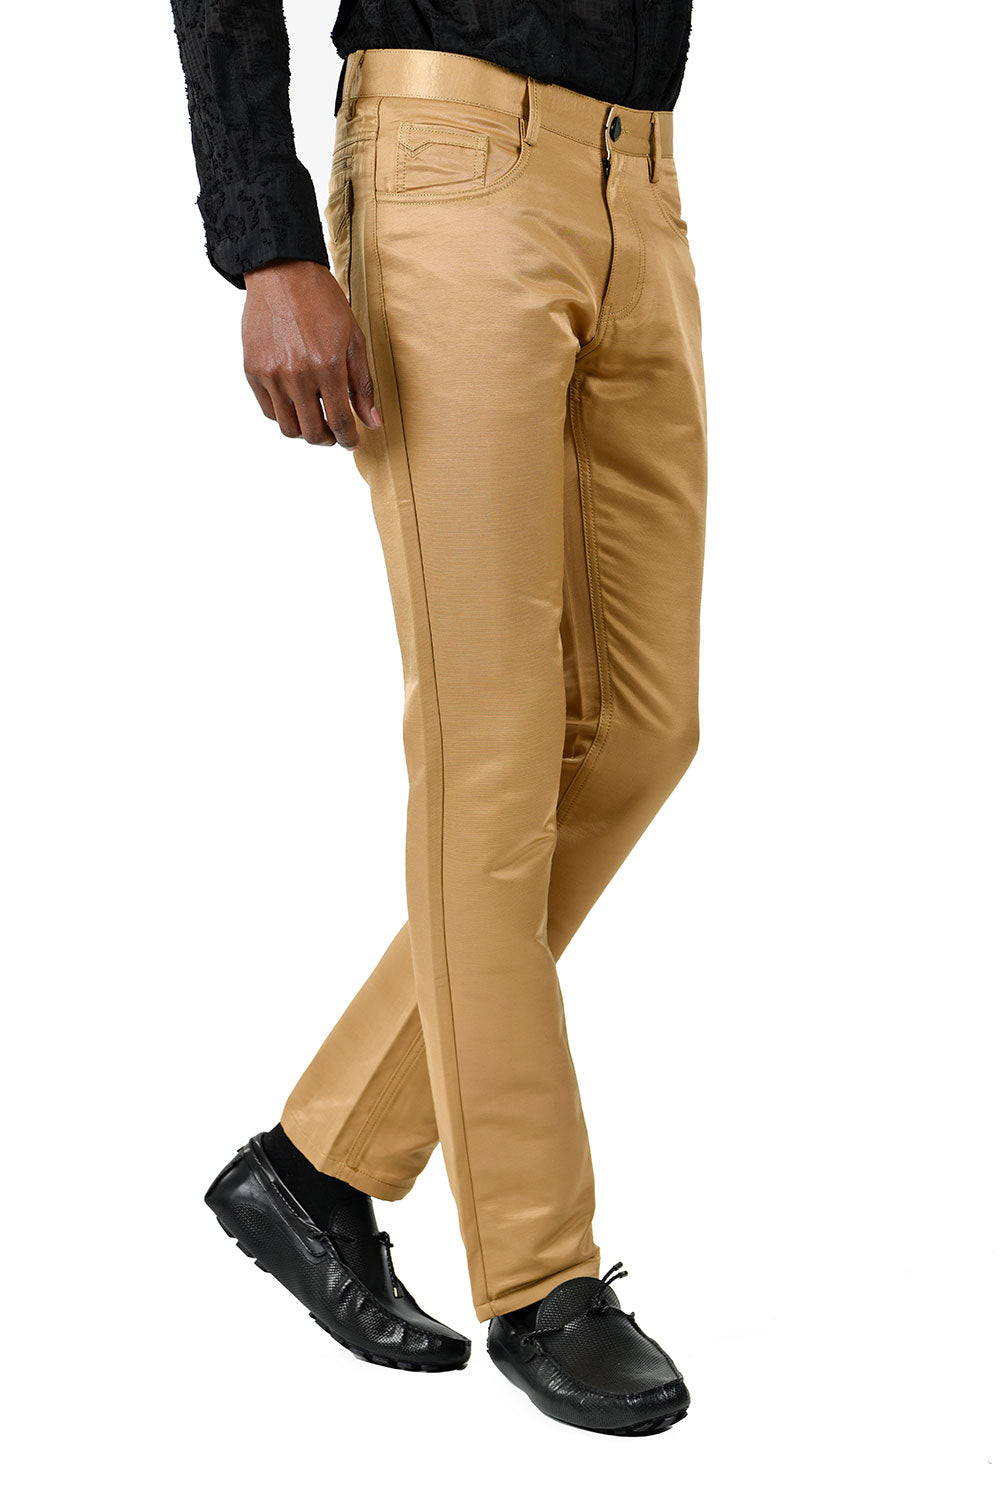 BARABAS Men's Shiny Solid Gold Color Chino Pants 2605